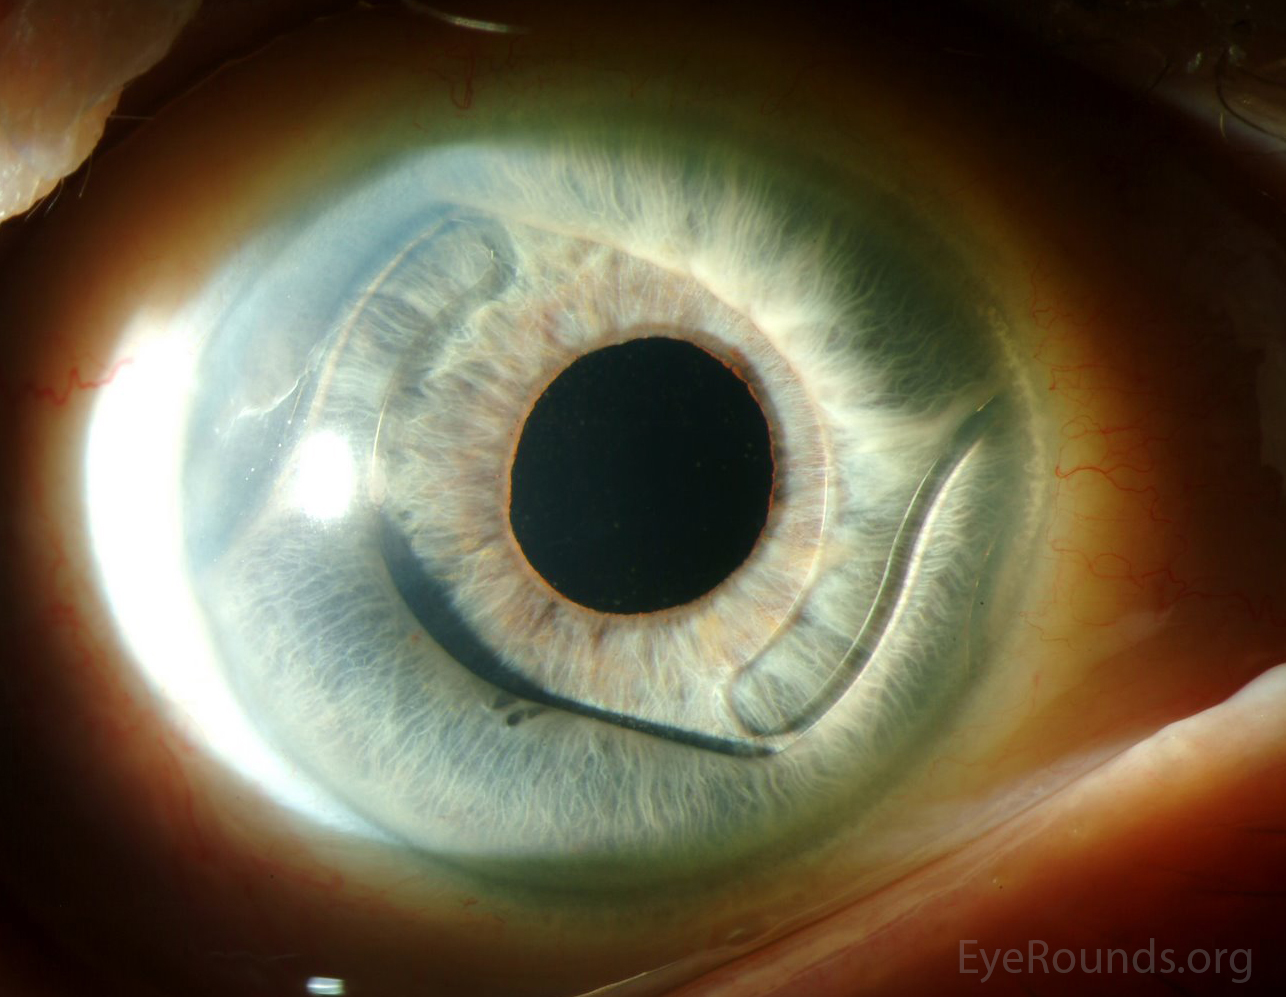 Anterior chamber intraocular lens (ACIOL)